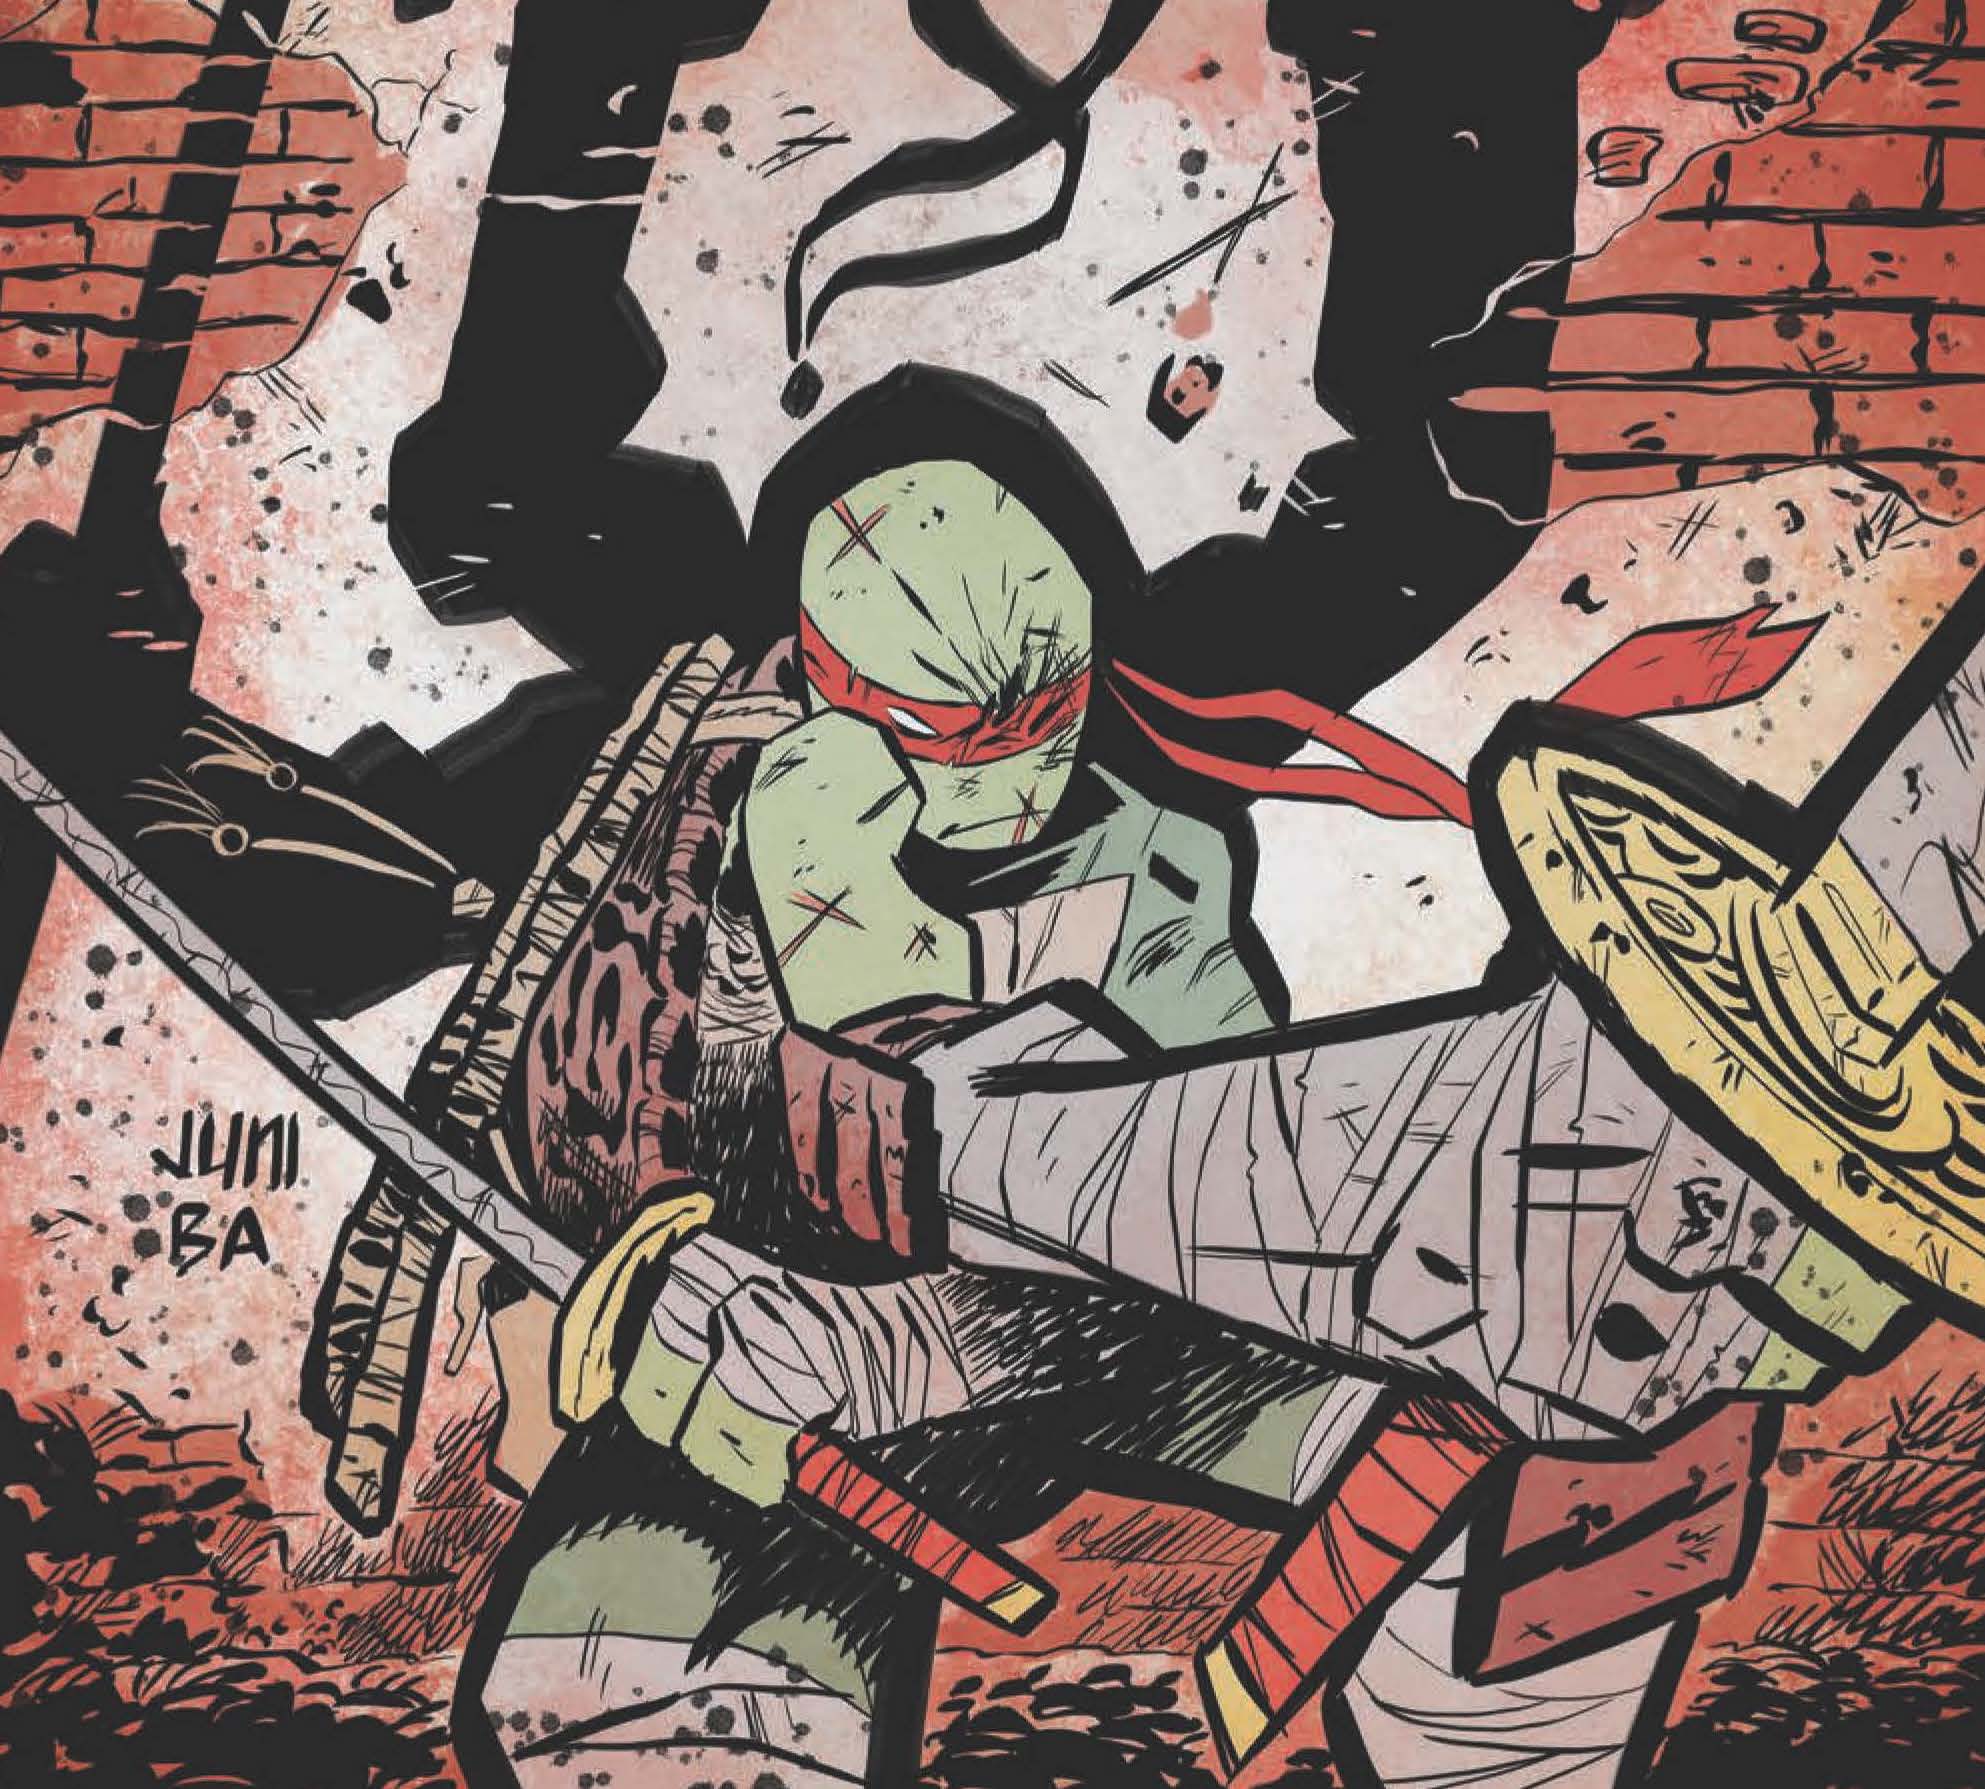 'Teenage Mutant Ninja Turtles Annual 2022' tells a story in every panel